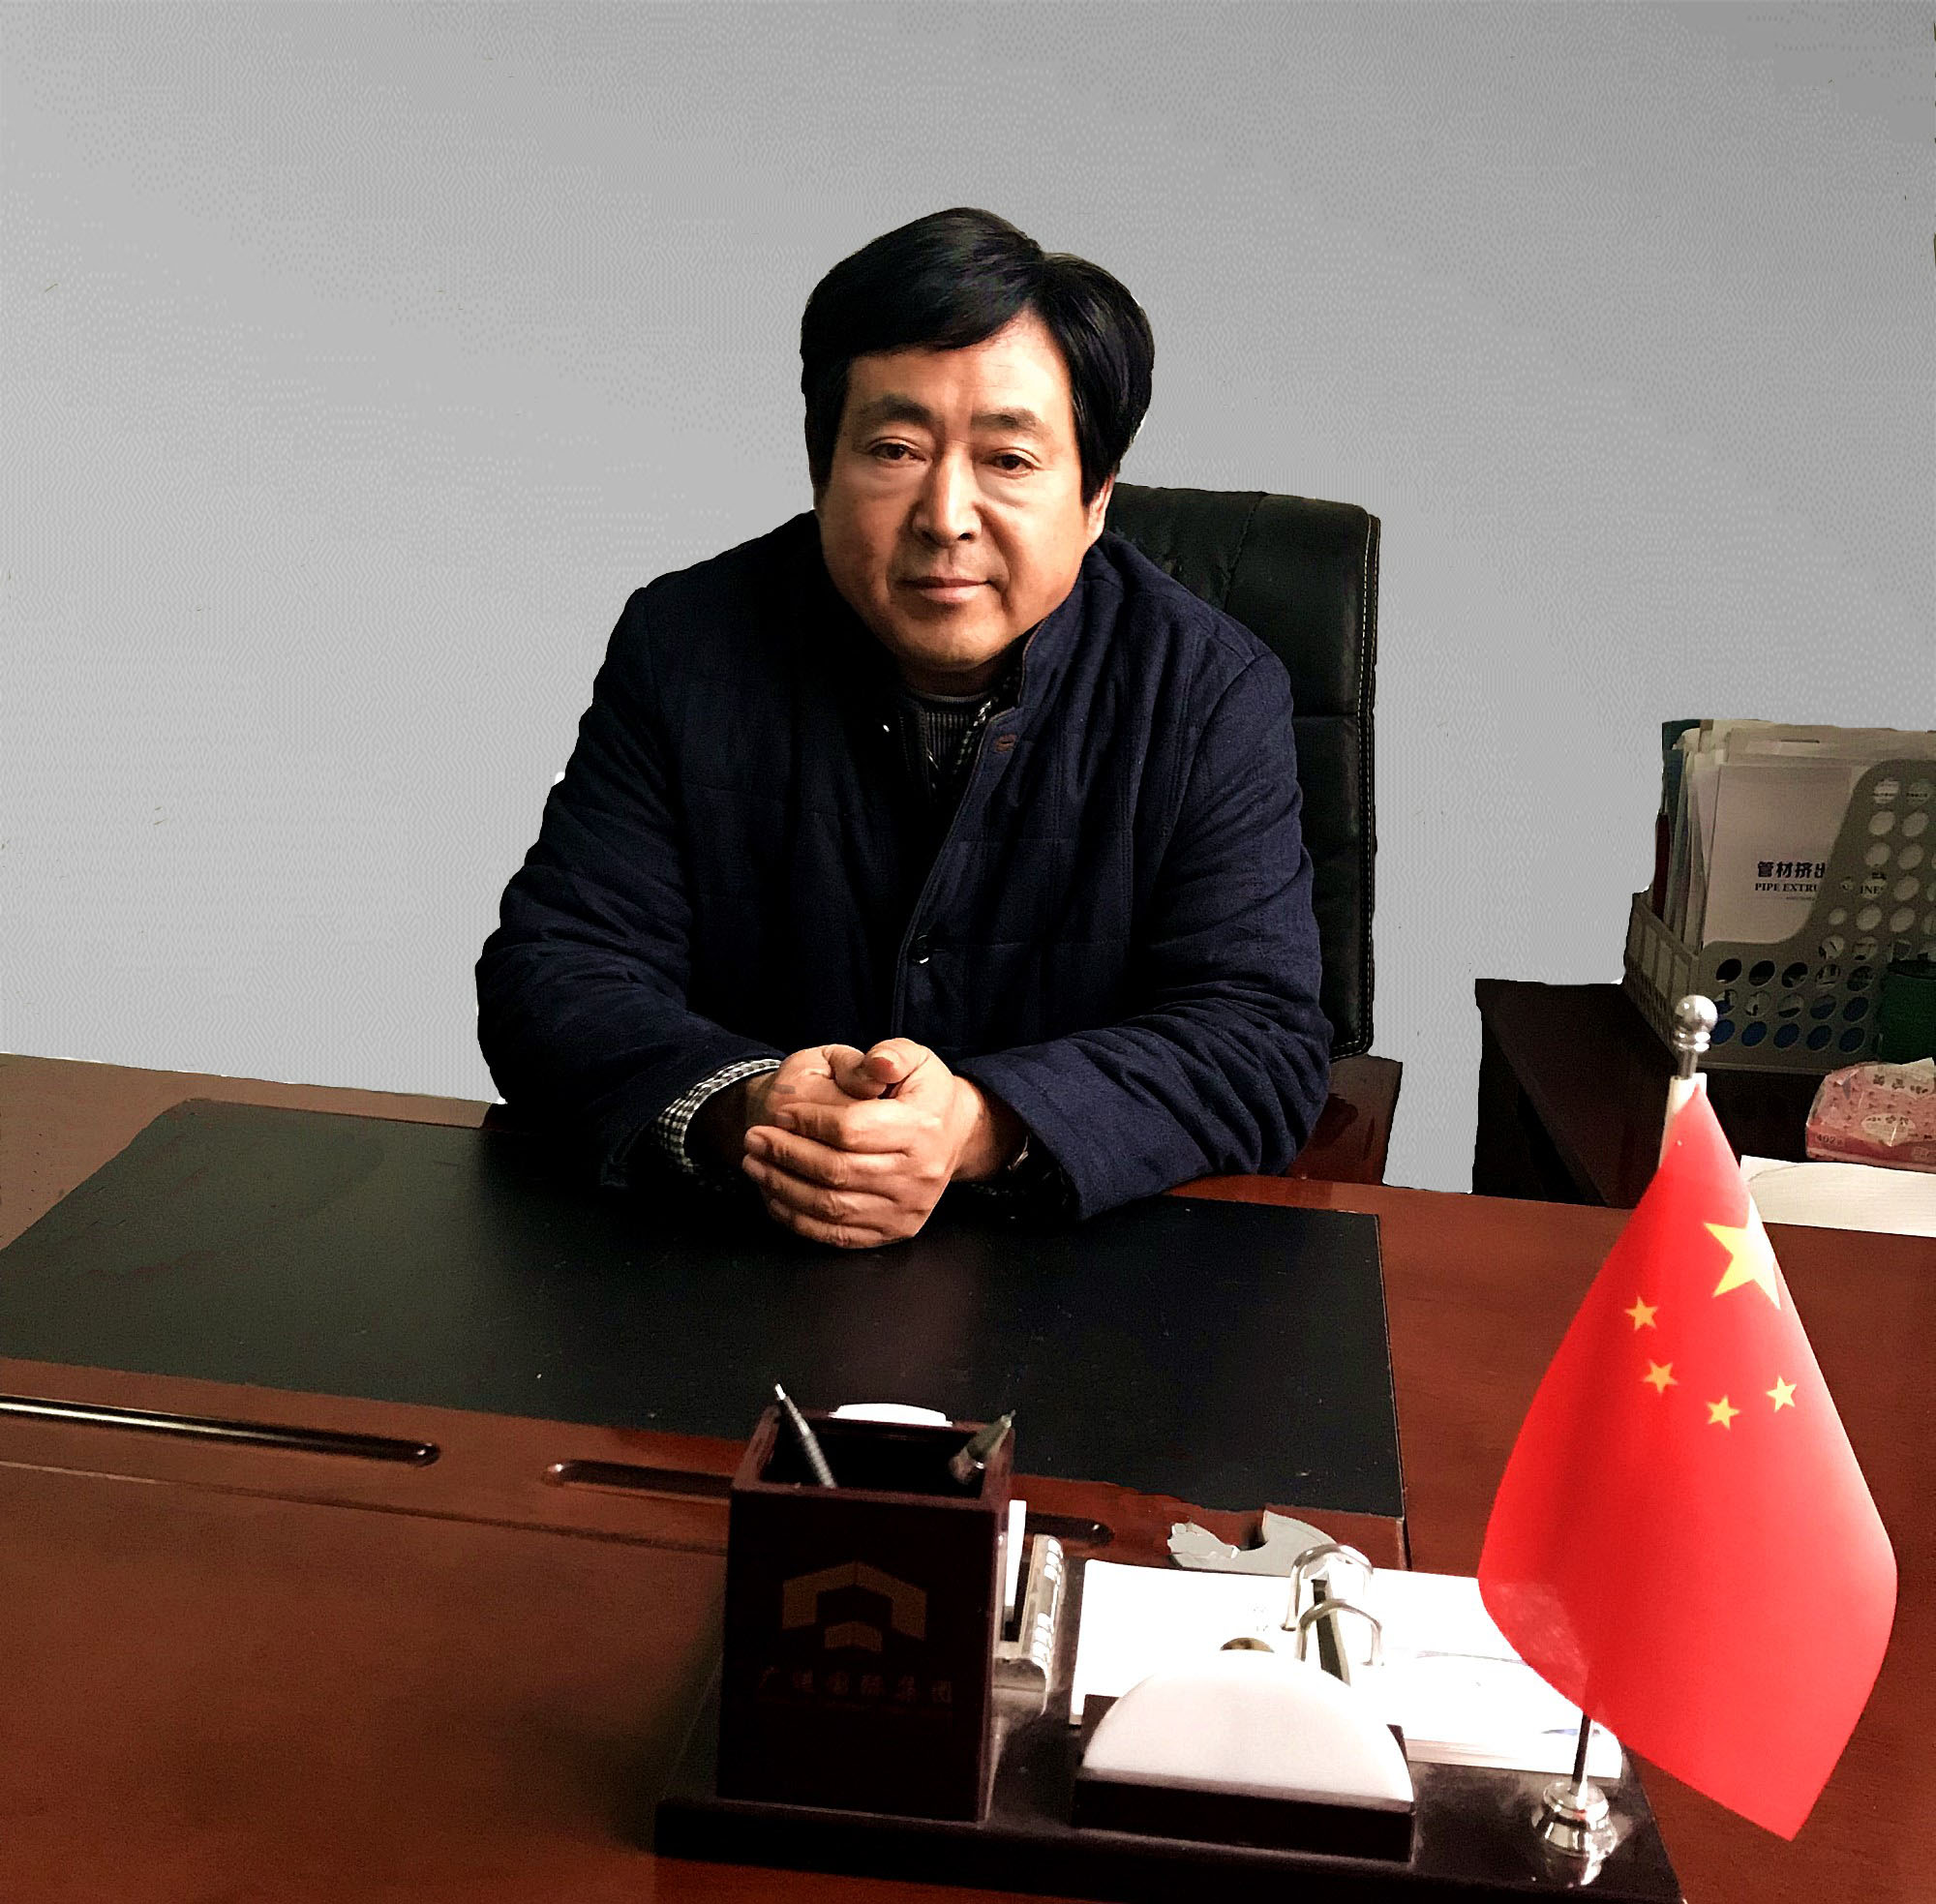 Liu Haibin